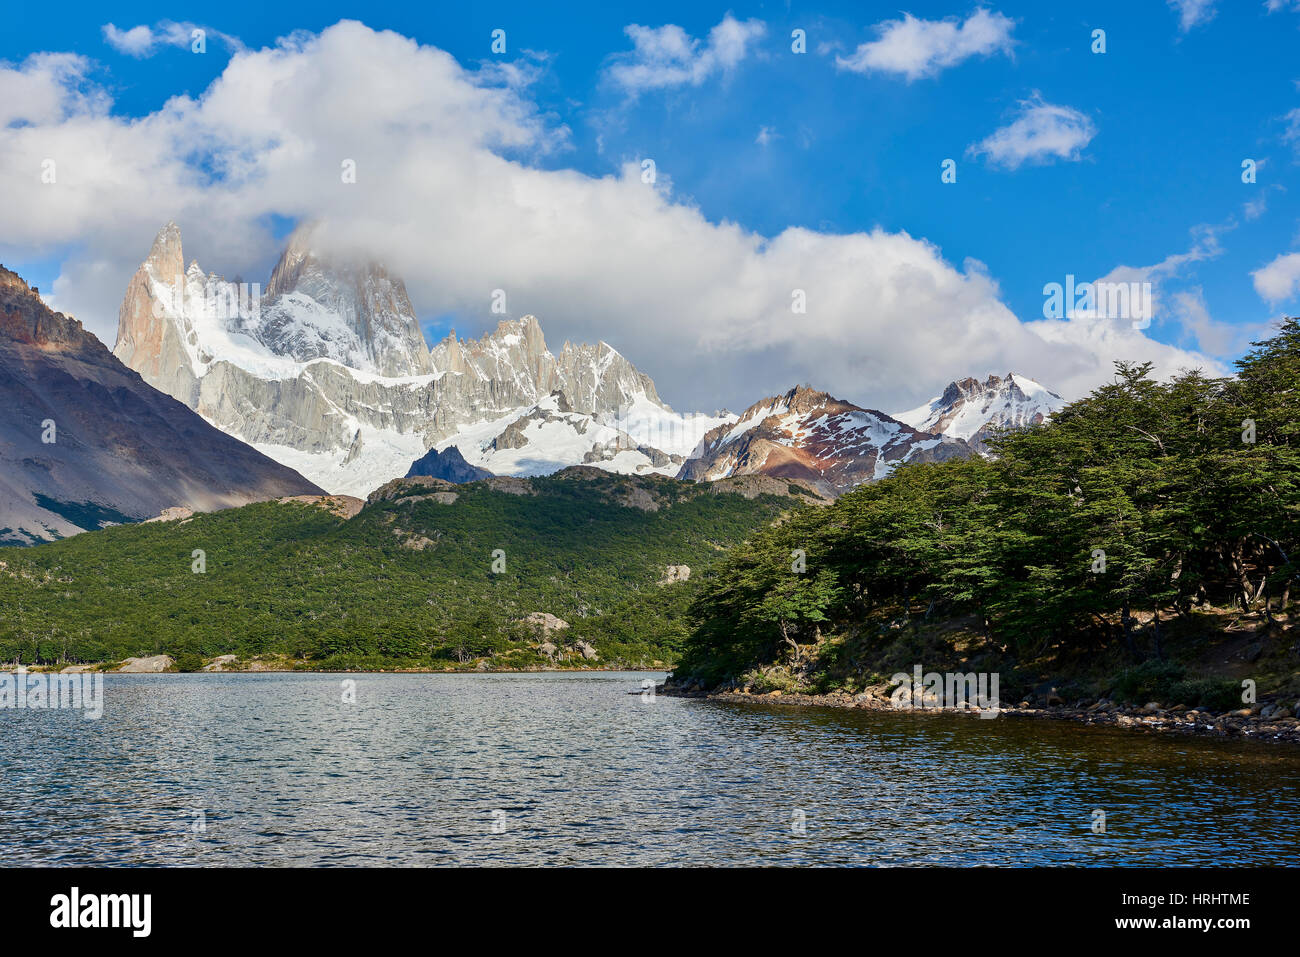 Capri Laguna con il Monte Fitz Roy in background, Patagonia, Argentina Foto Stock